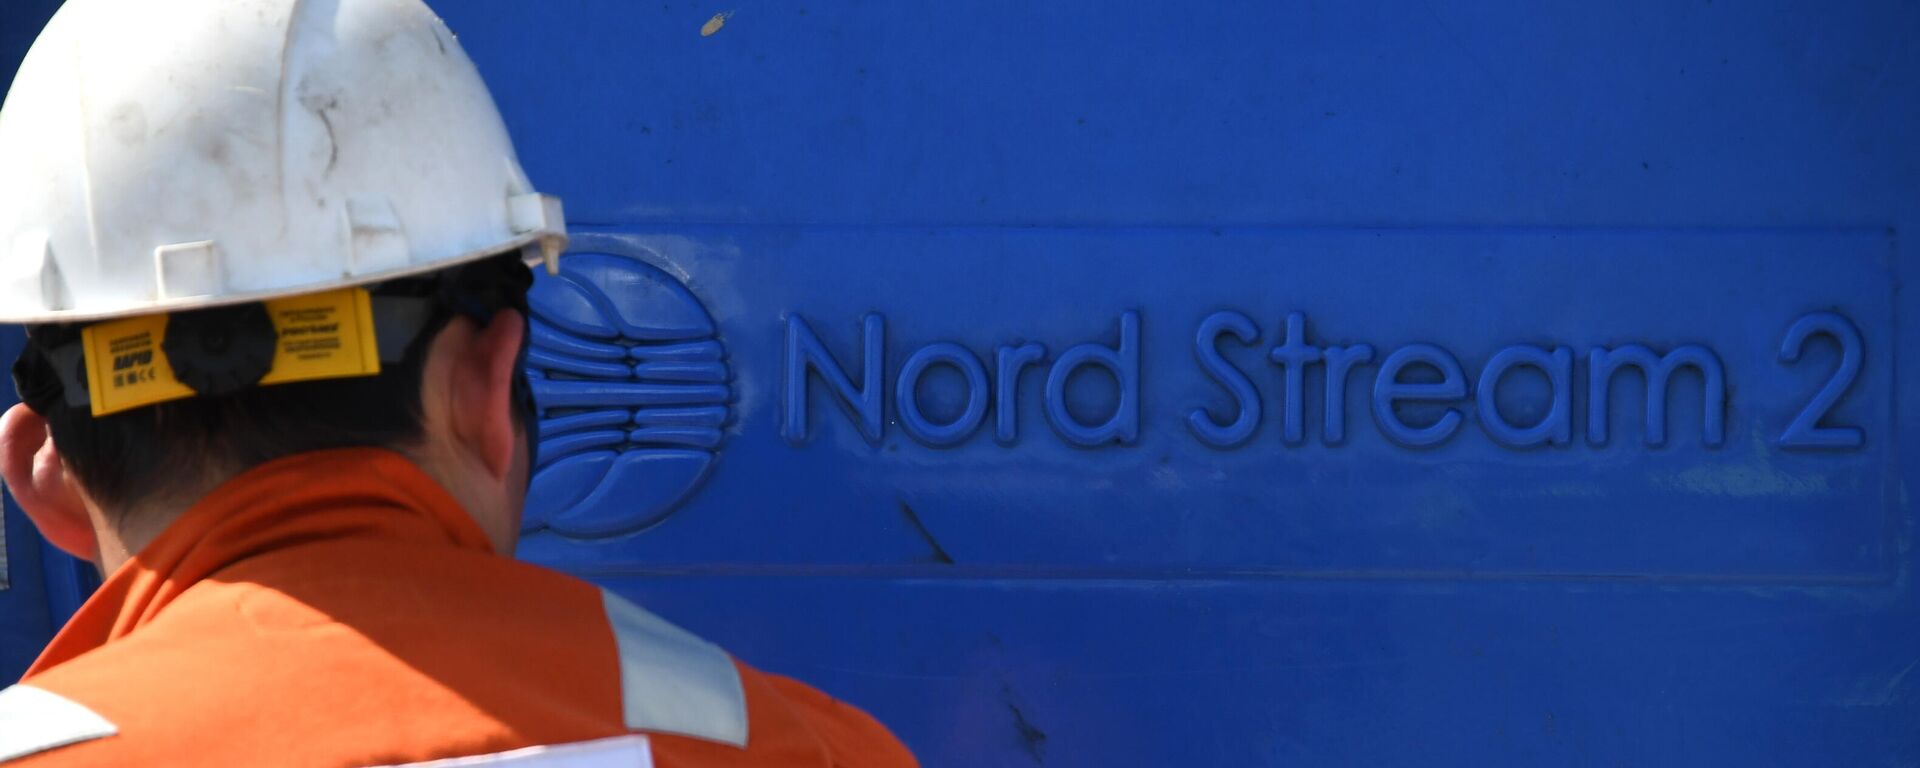 El Nord Stream 2 - Sputnik Mundo, 1920, 25.02.2023